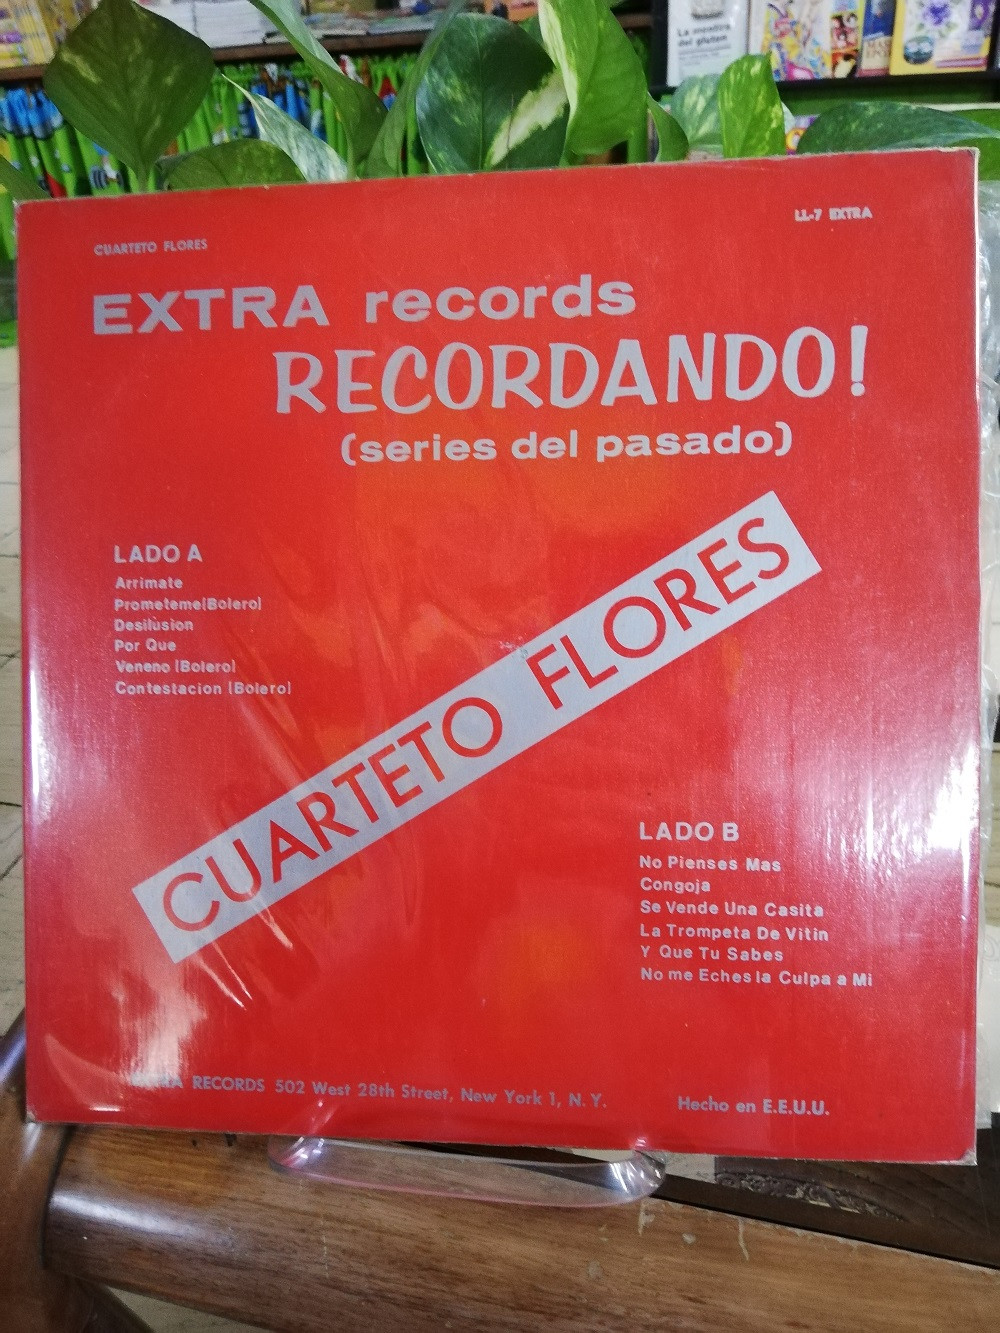 Imagen LP IMPORTADO CUARTETO FLORES - RECORDANDO!